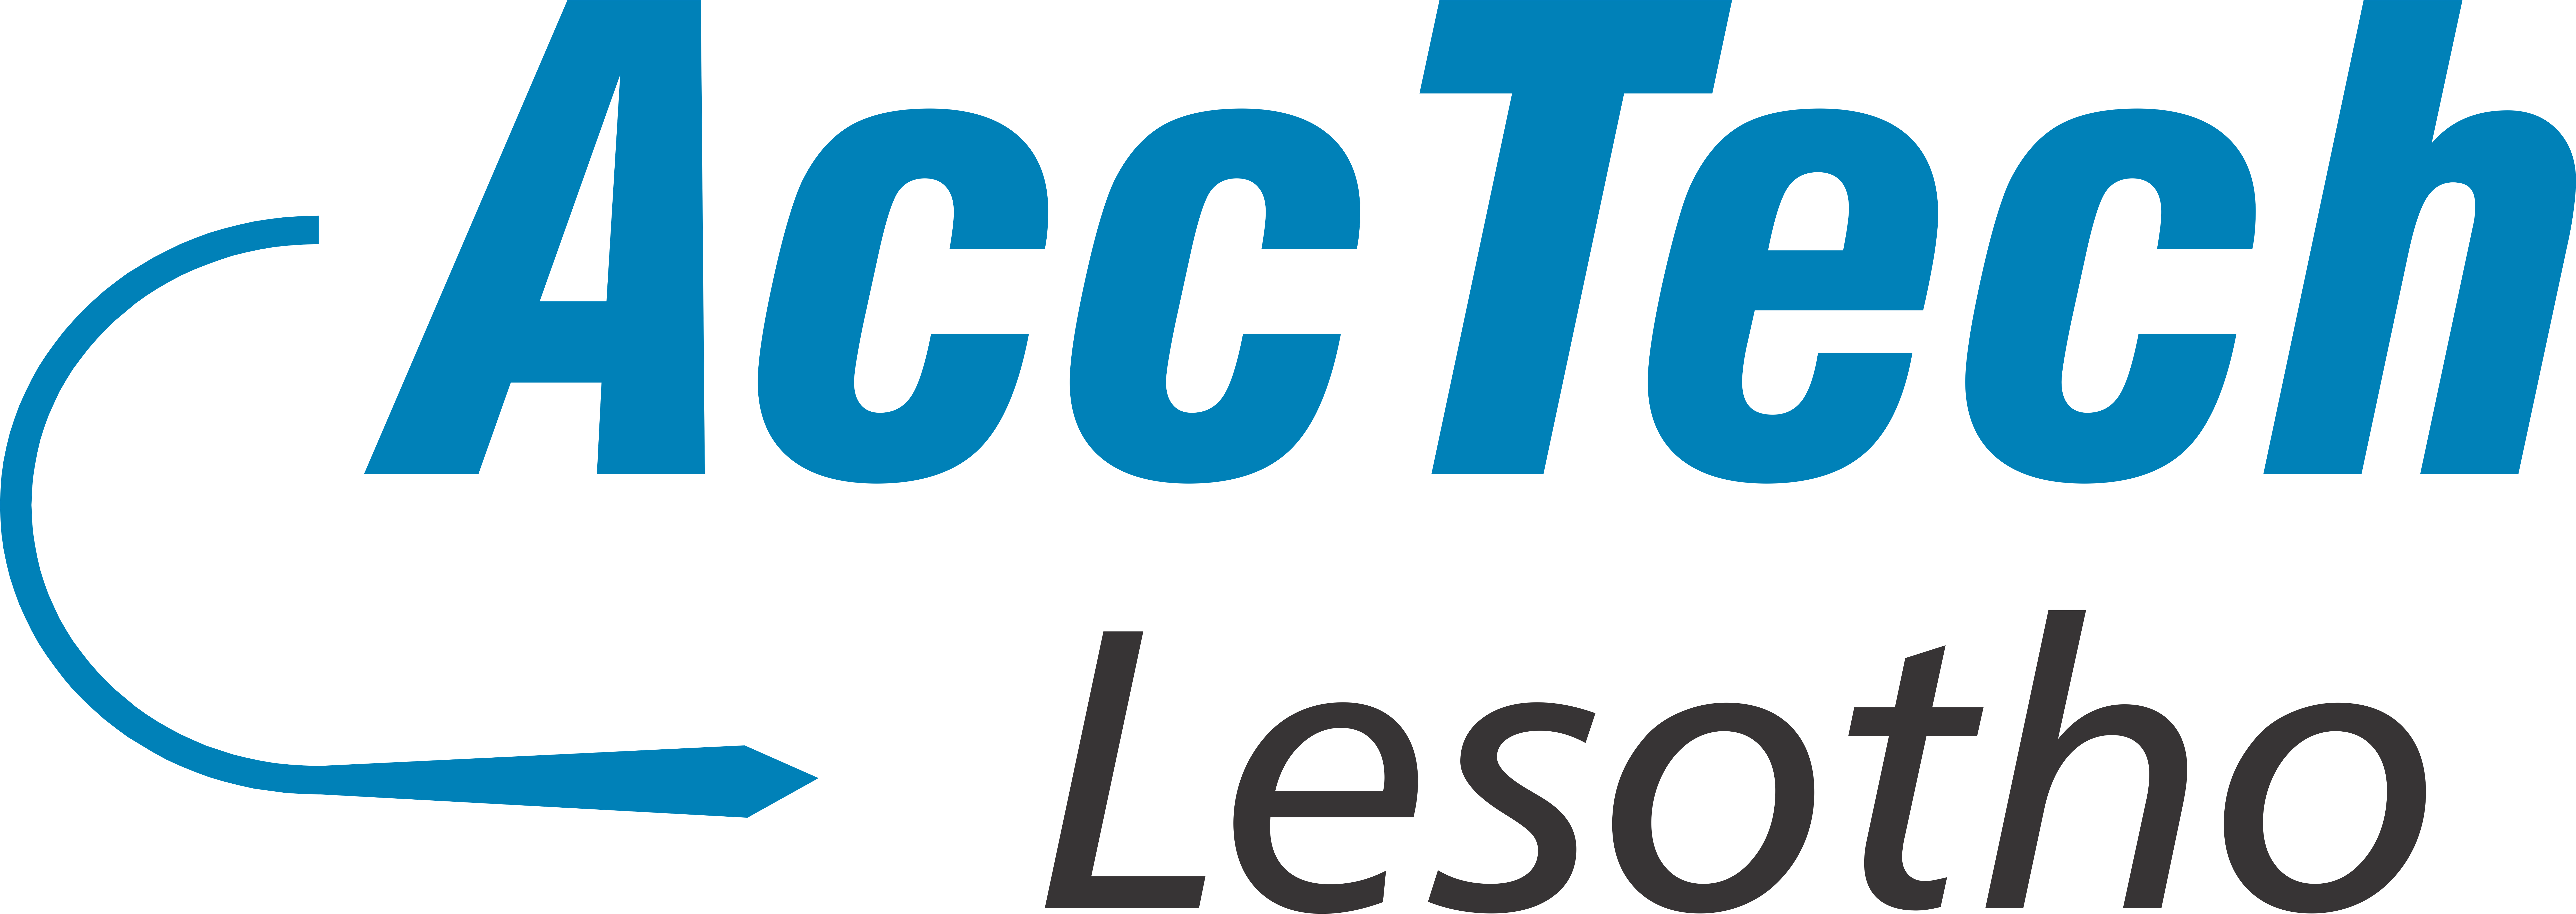 AccTech Lesotho